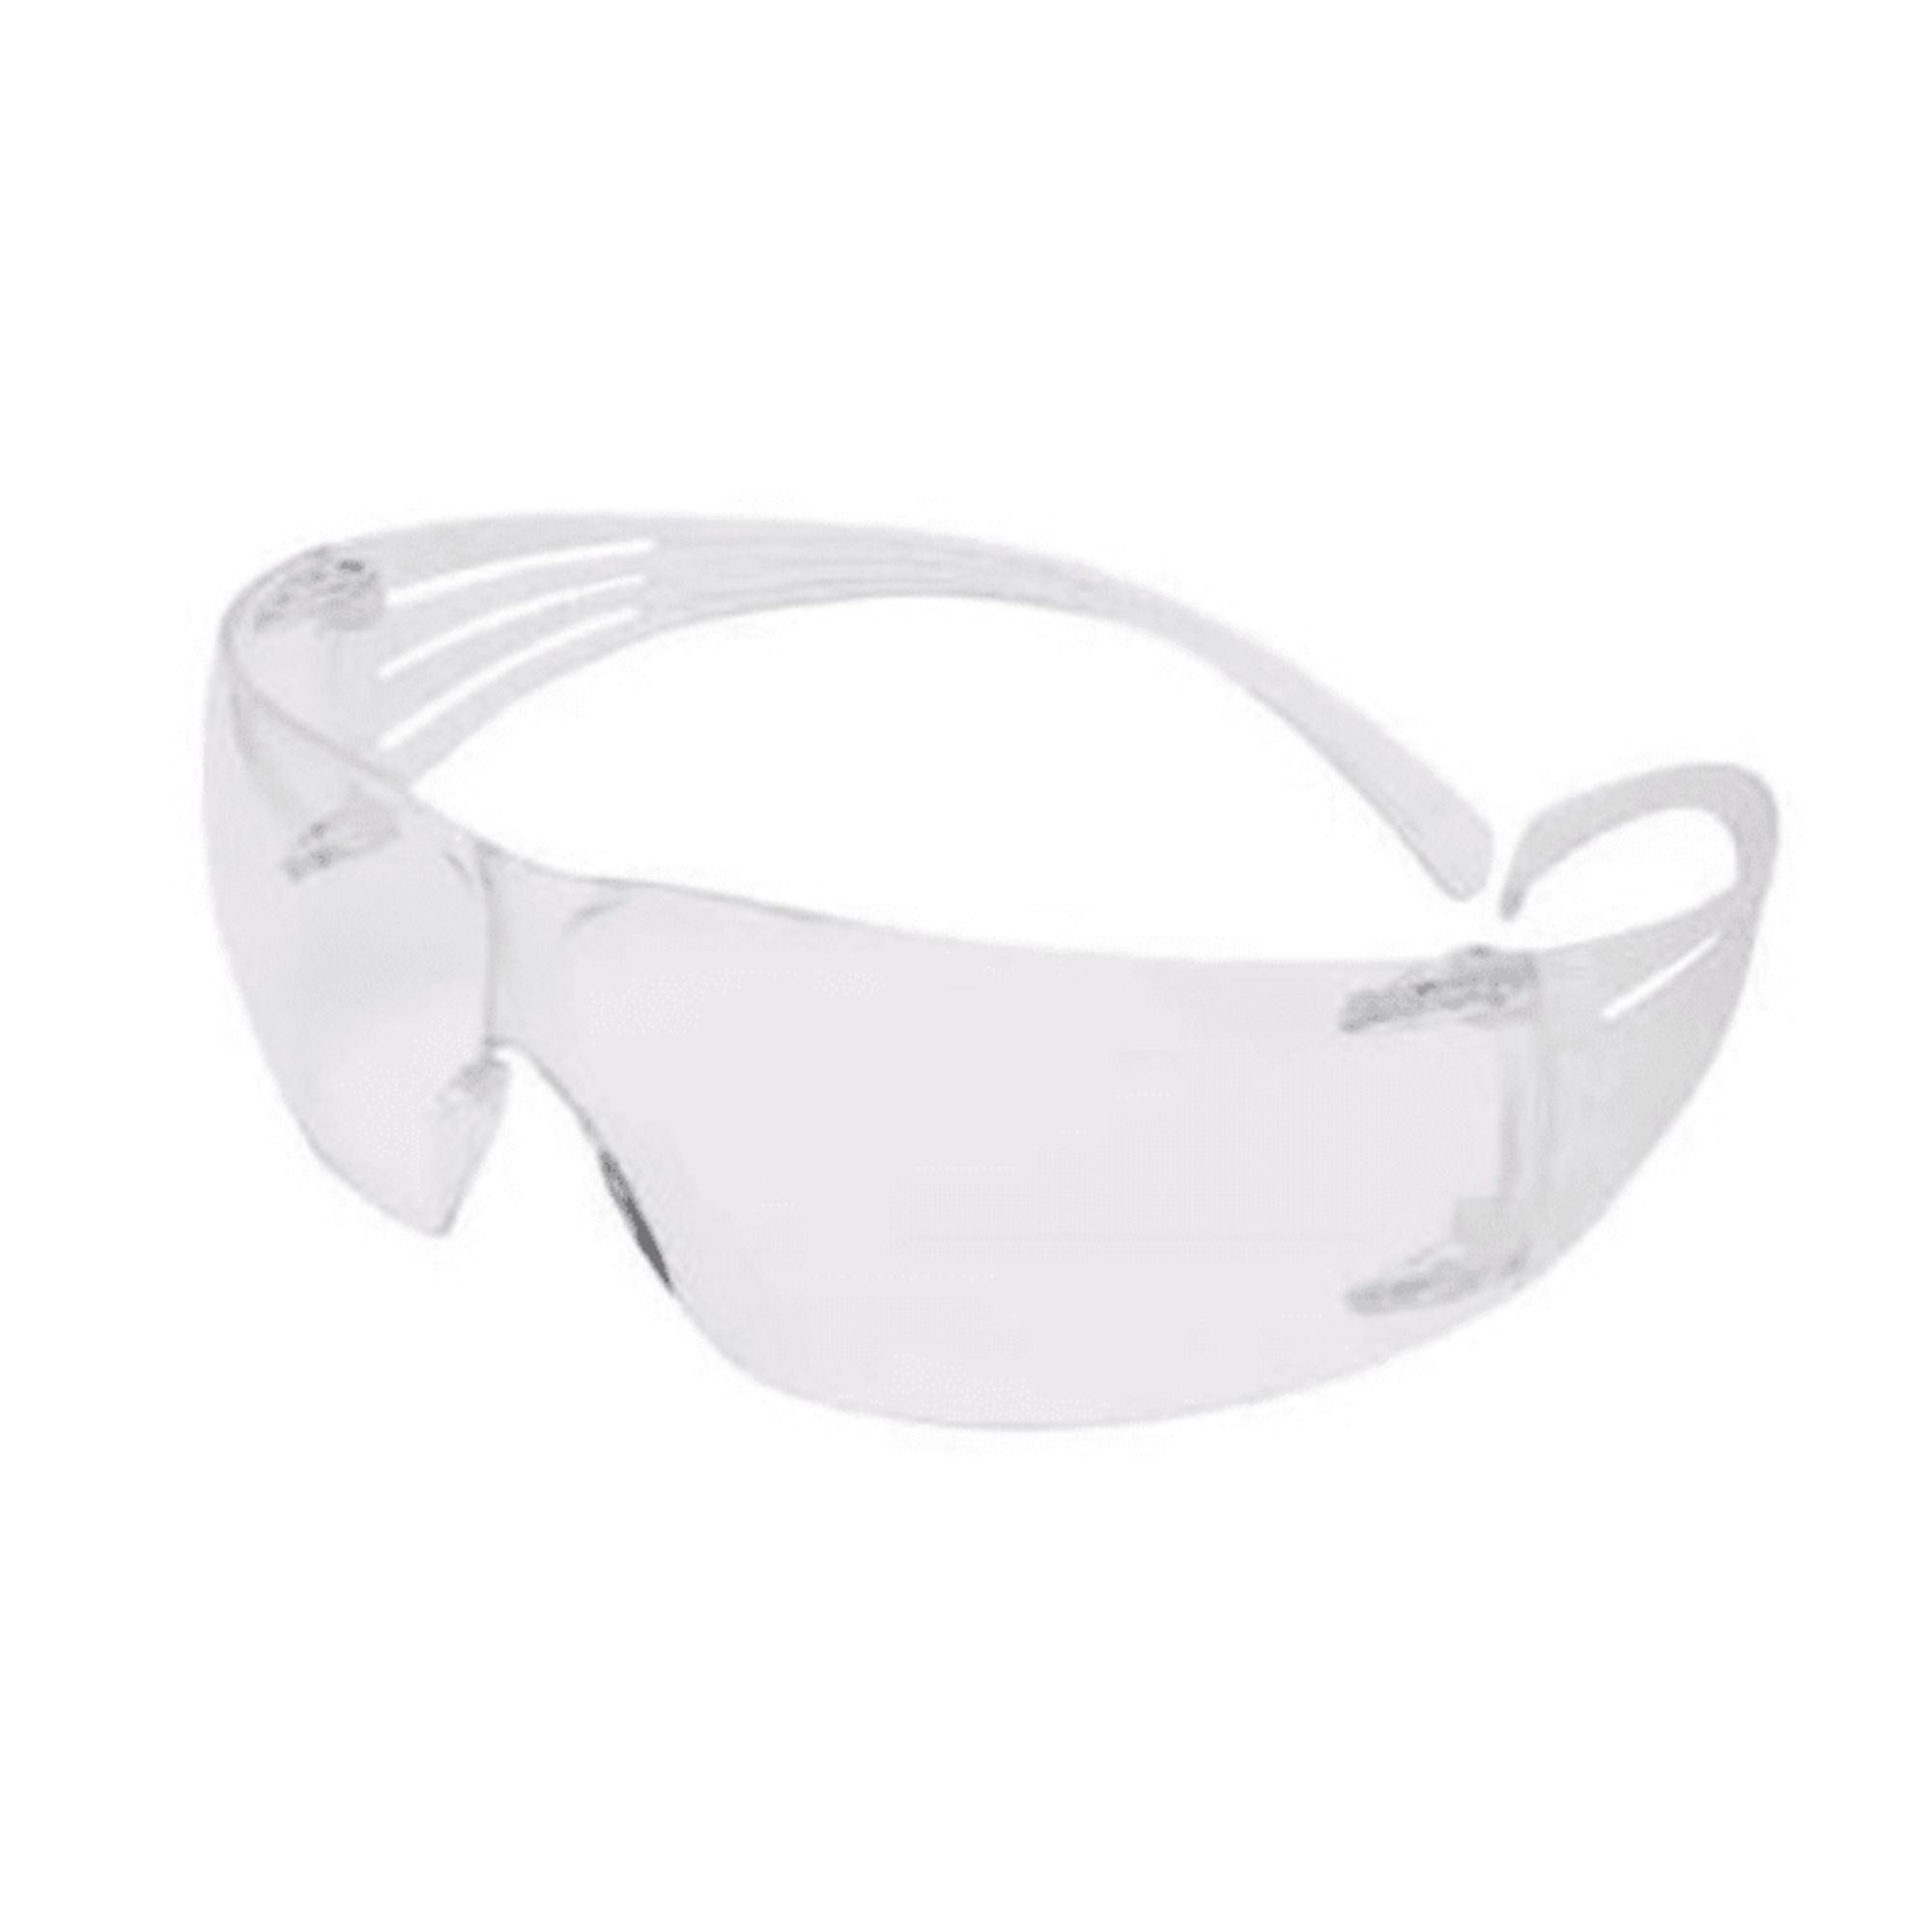 Oculos de proteção antiembaciam. lente cinza SF 202AS/AF 3M